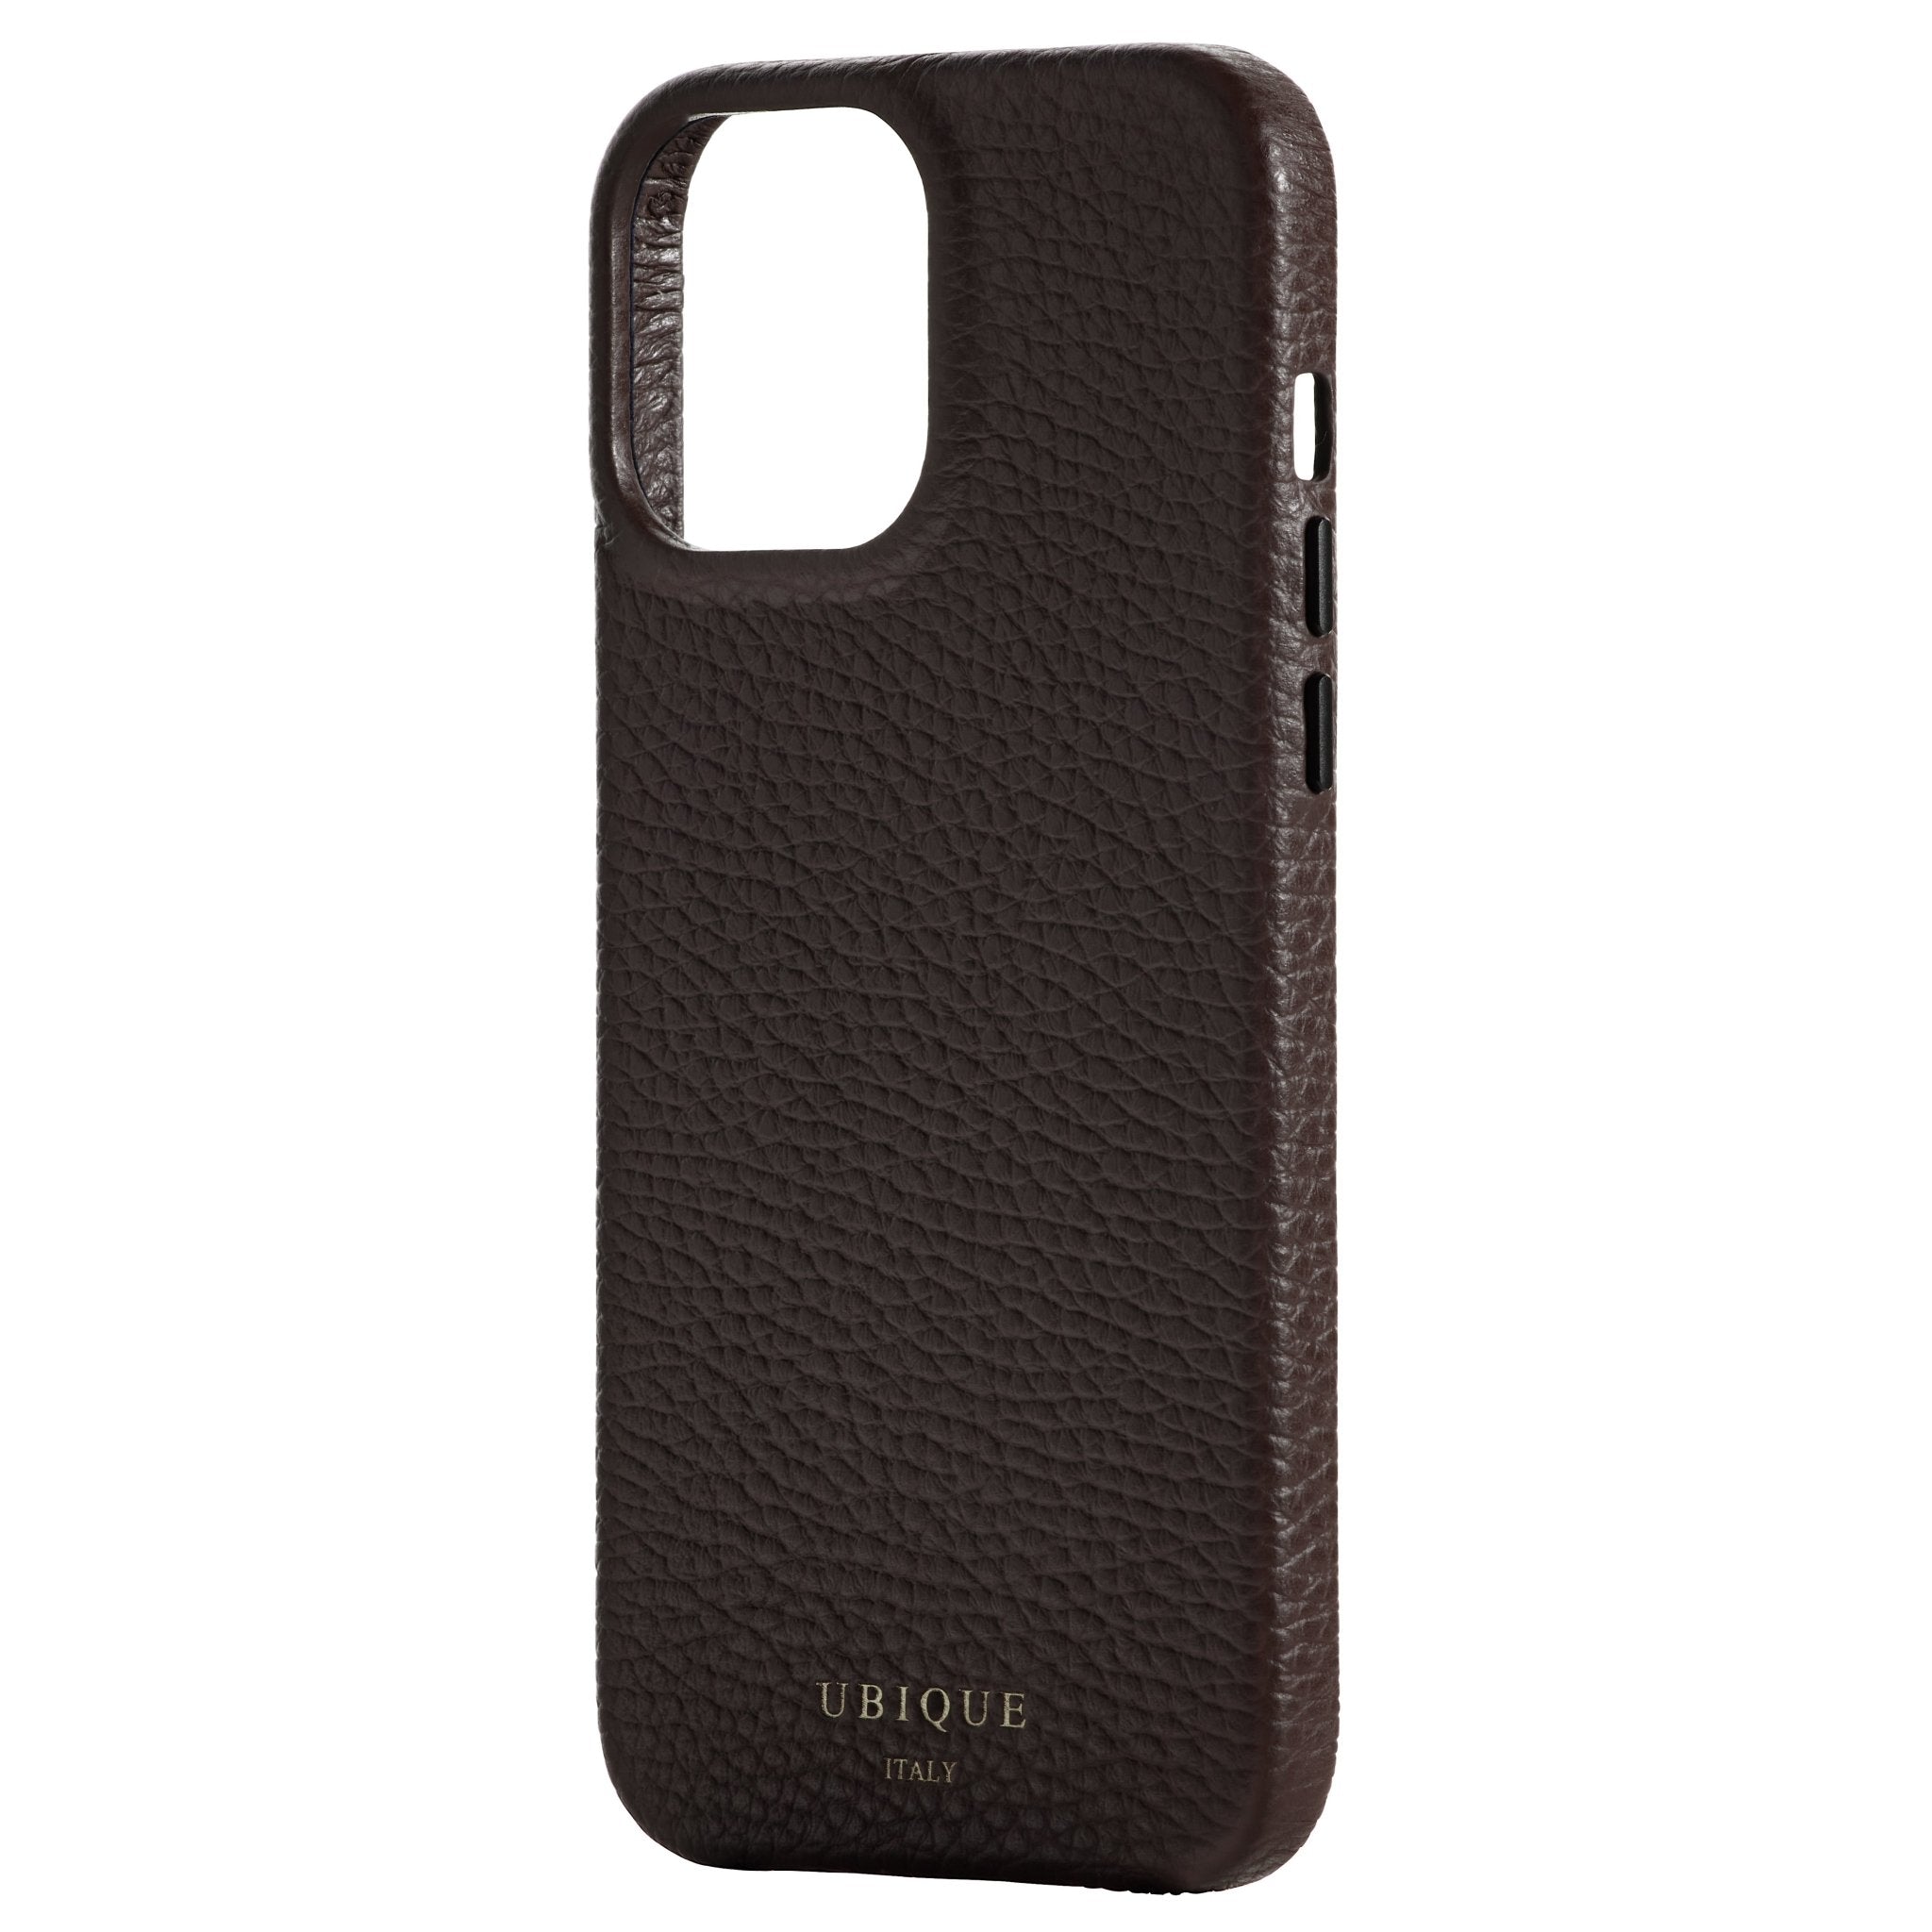 Ubique Italy Luxury iPhone Case 13 Pro Max Pebble Grain Leather Dark Walnut Angled